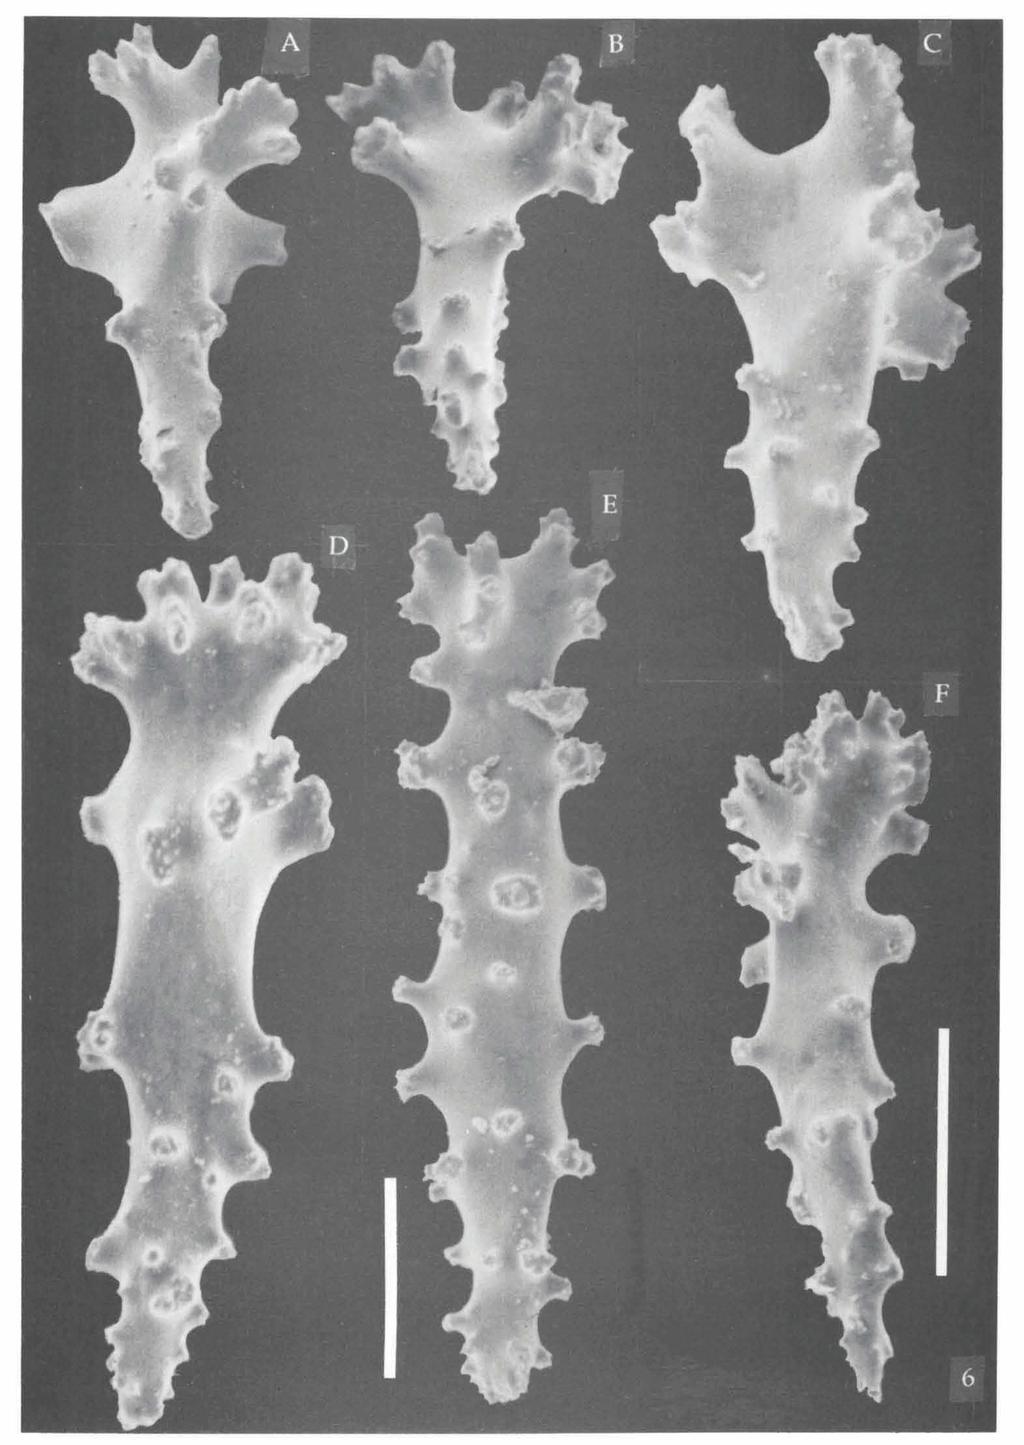 150 ZOOLOGISCHE MEDEDELINGEN 65 (1991) Fig. 6. Sinularia abhishiktae spec, nov.